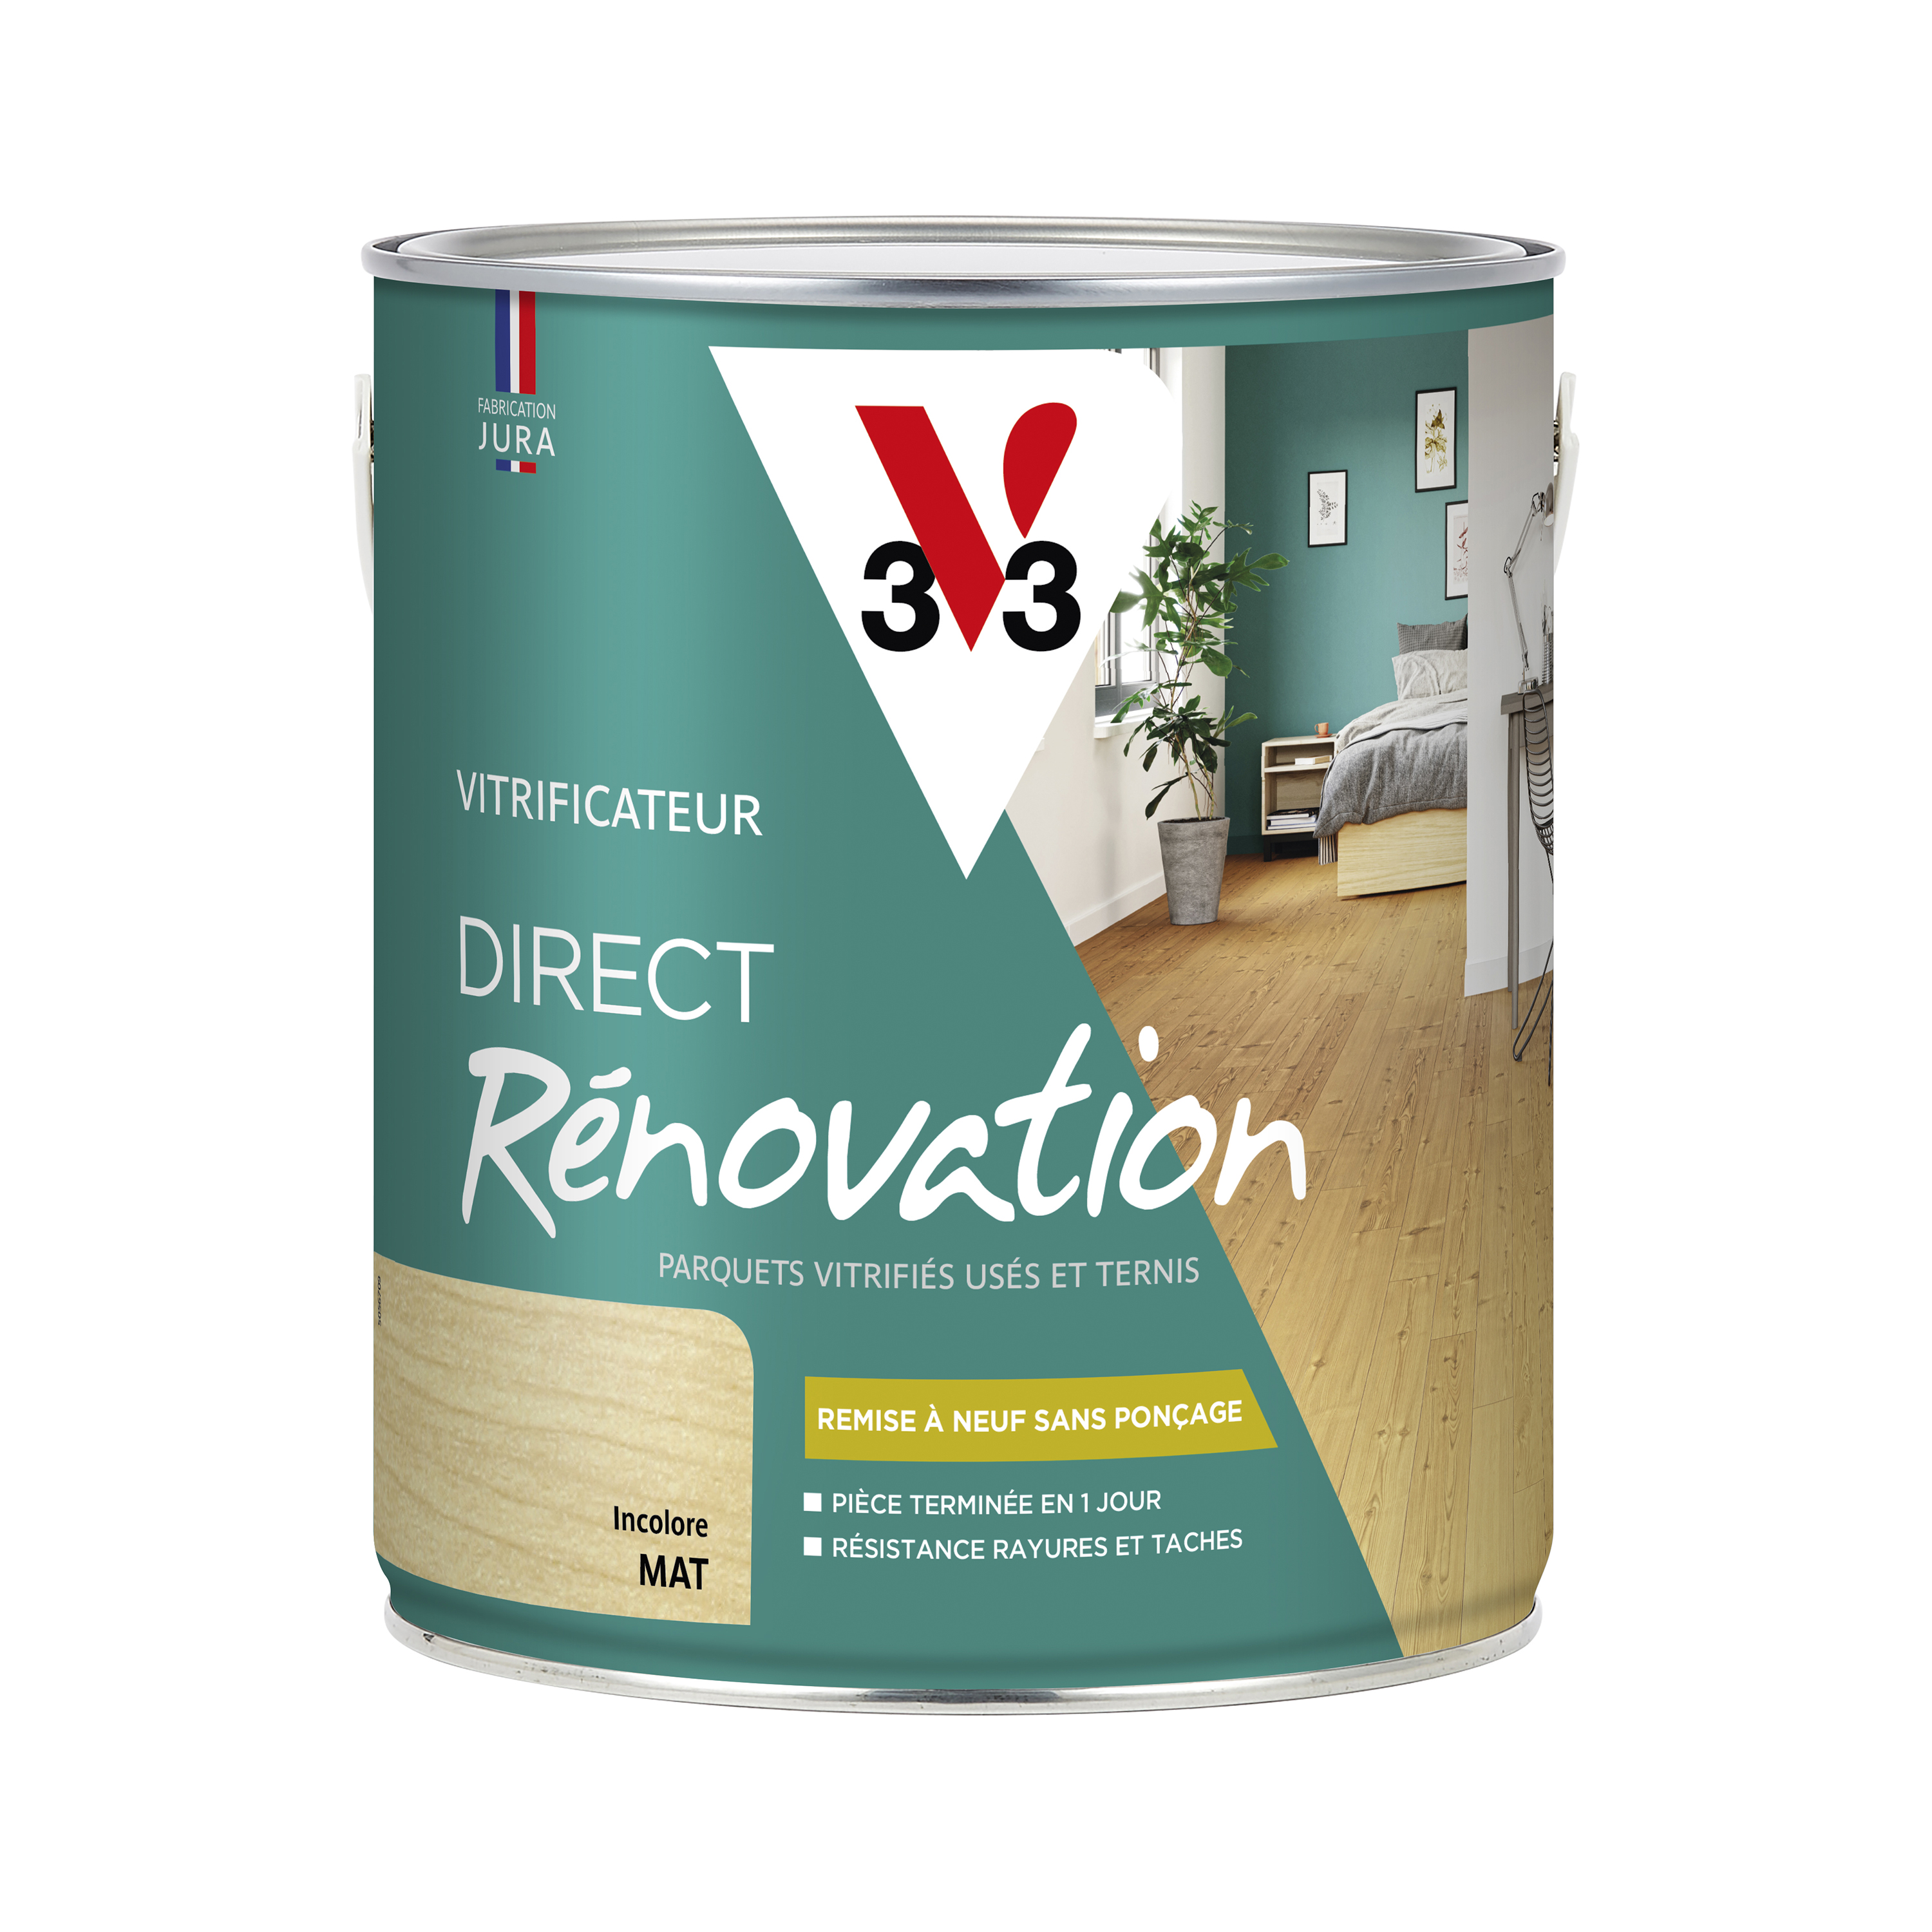 Vitrificateur renovation mat incolore 2,5 L - V33